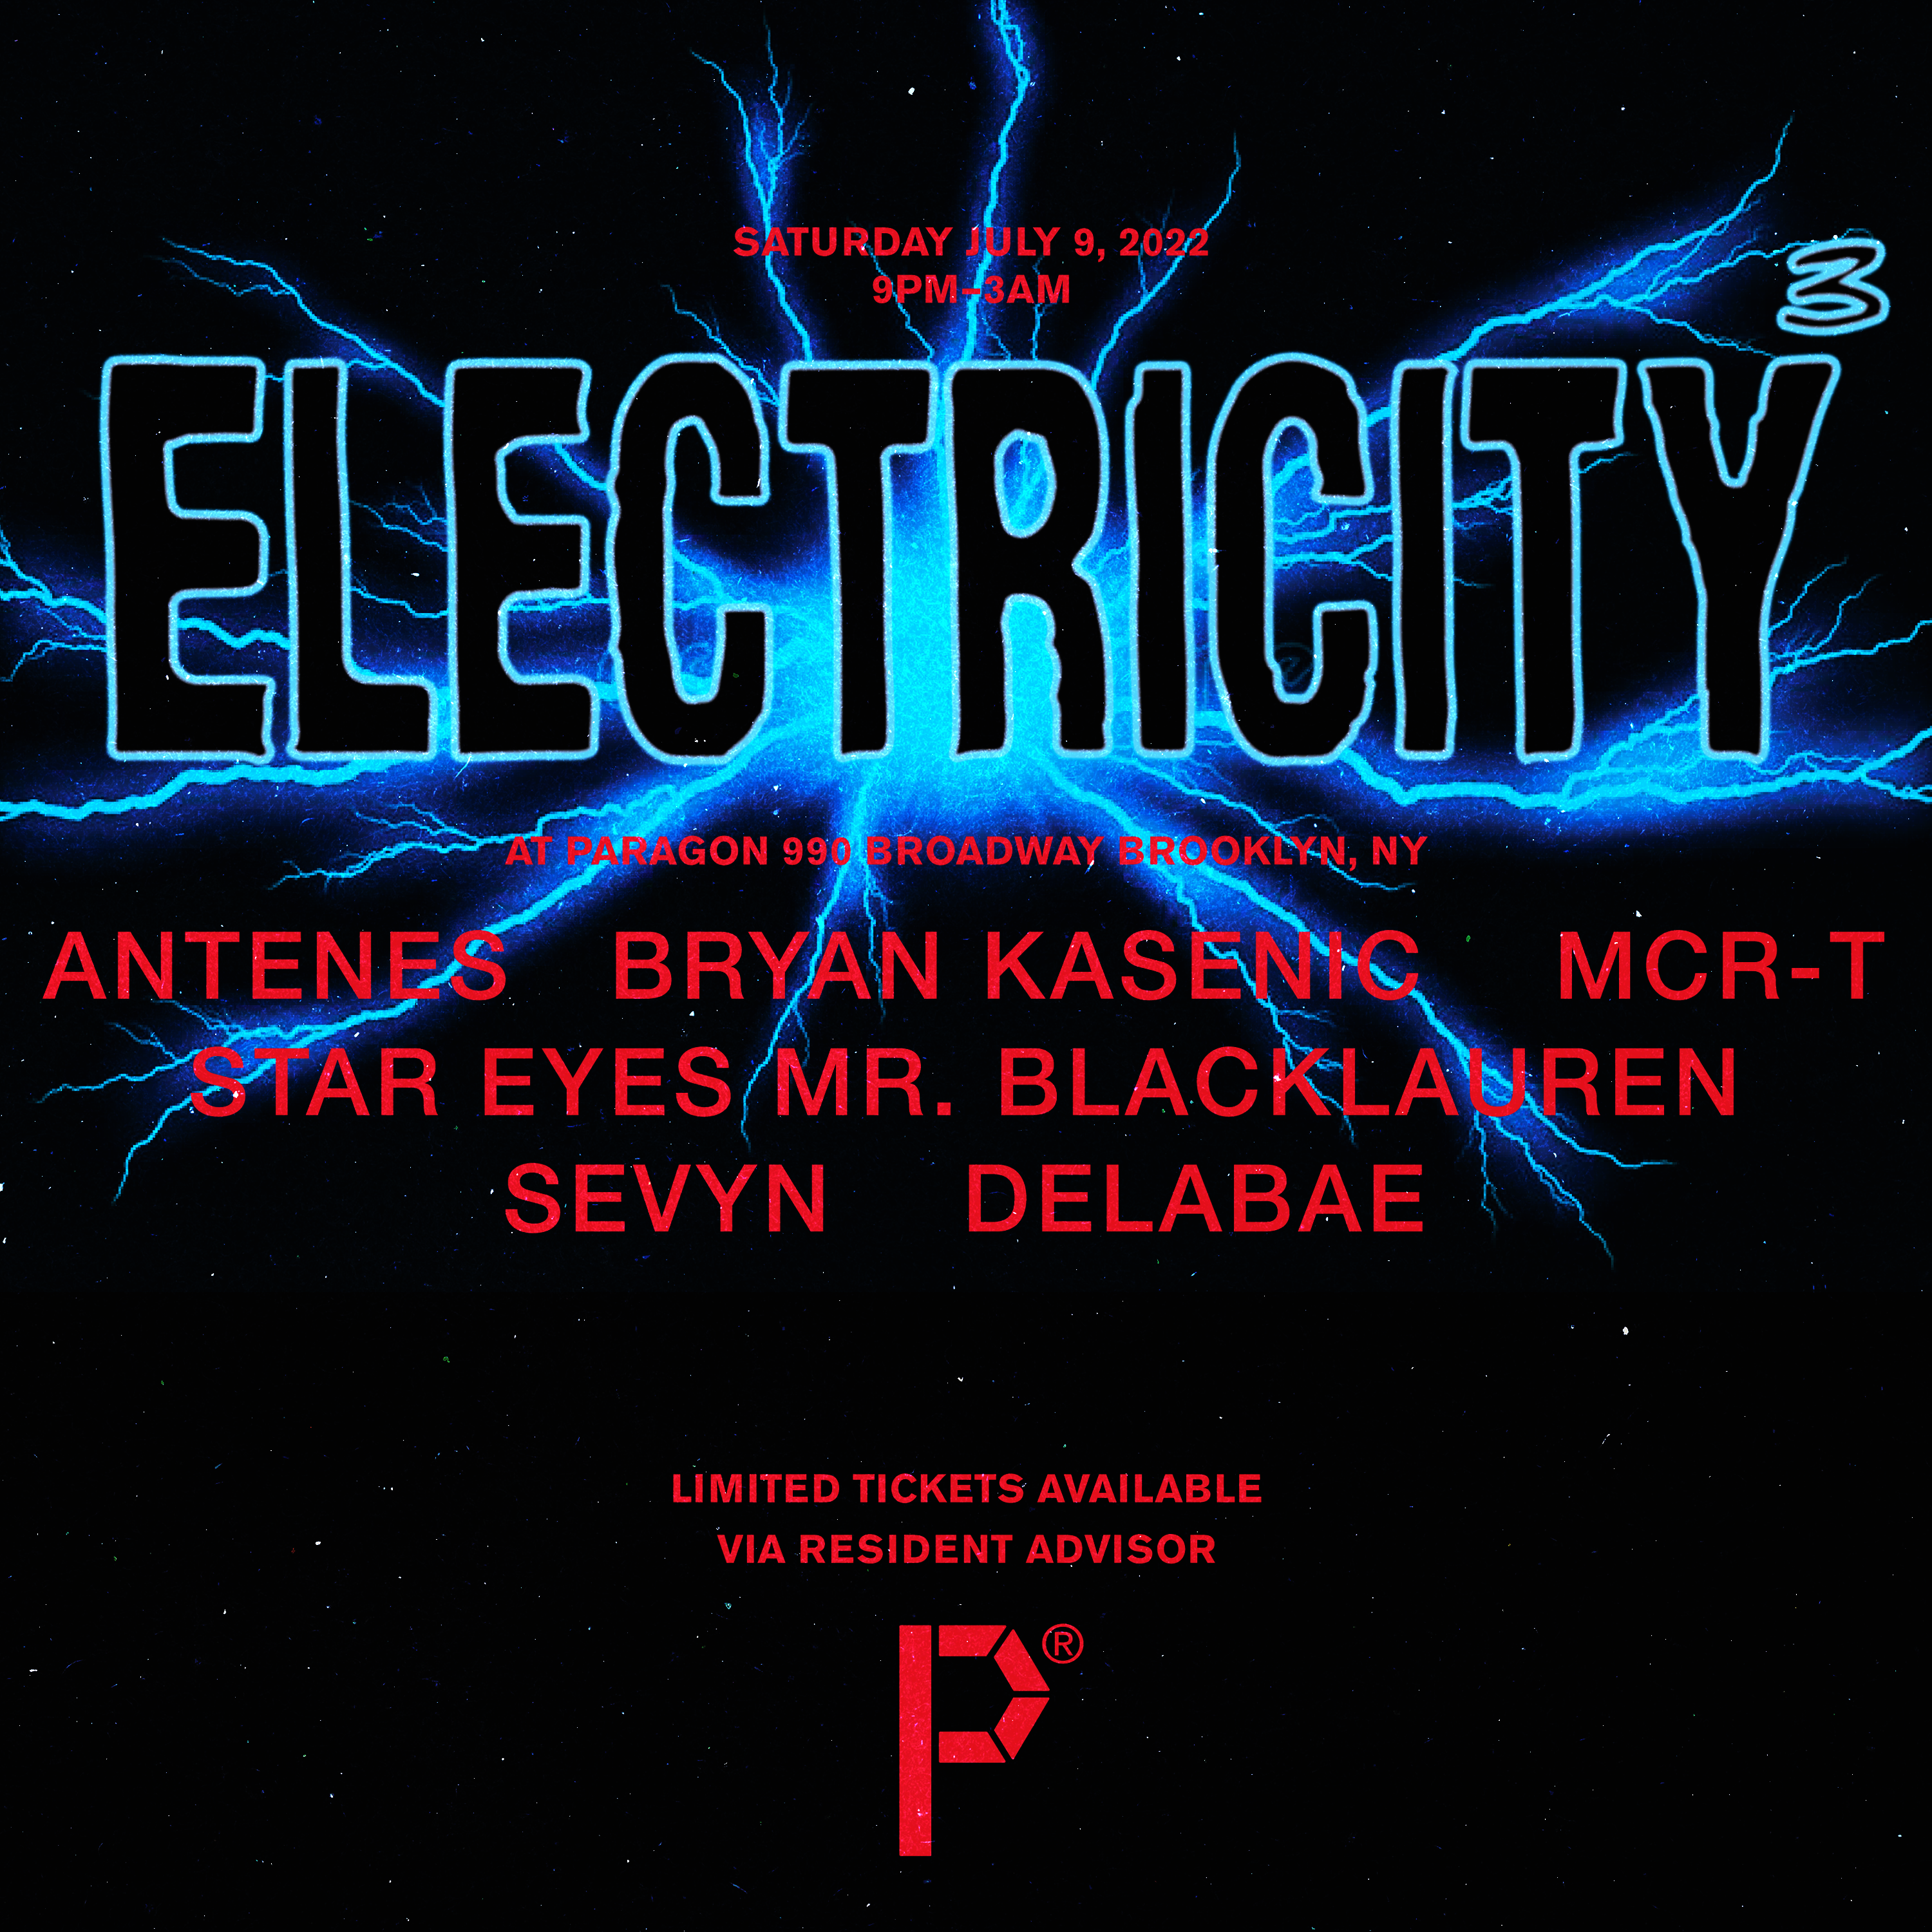 ELECTRICITY³ featuring: Antenes Bryan Kasenic MCR-T Star Eyes Mr. Blacklauren - フライヤー表